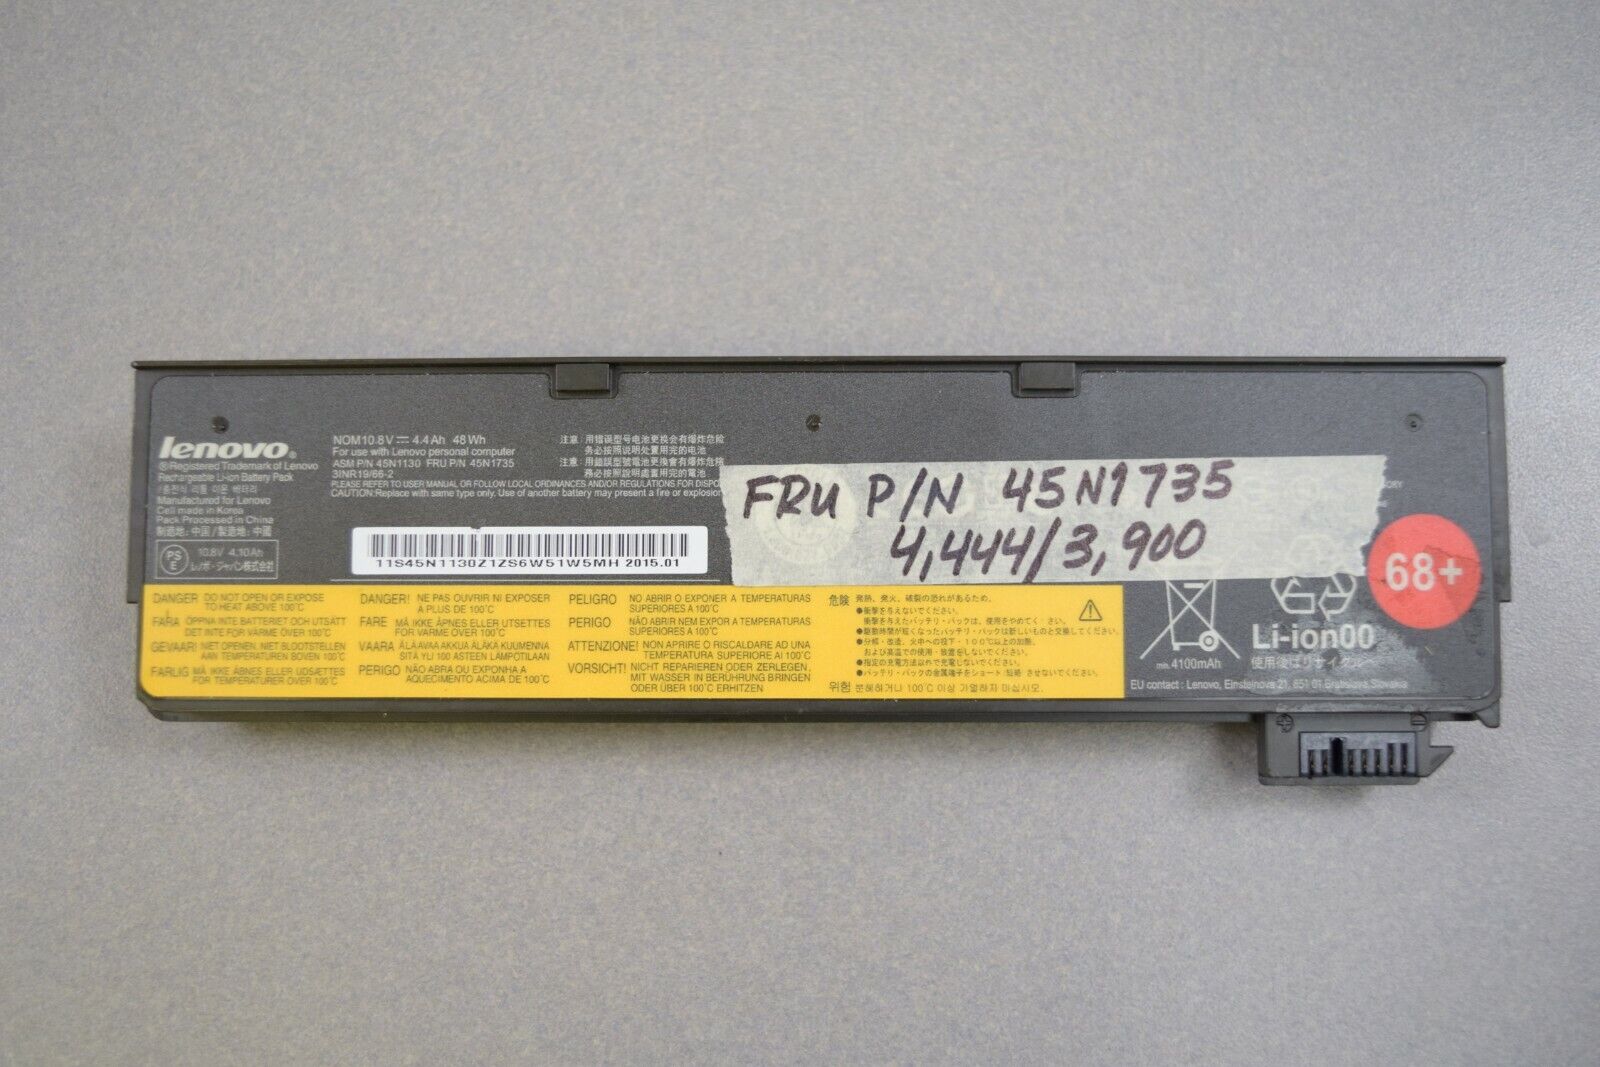 (lot of 5) Lenovo Battery 45N1735 68+ For T440, L450, X240 Fully Tested Lenovo Does Not Apply